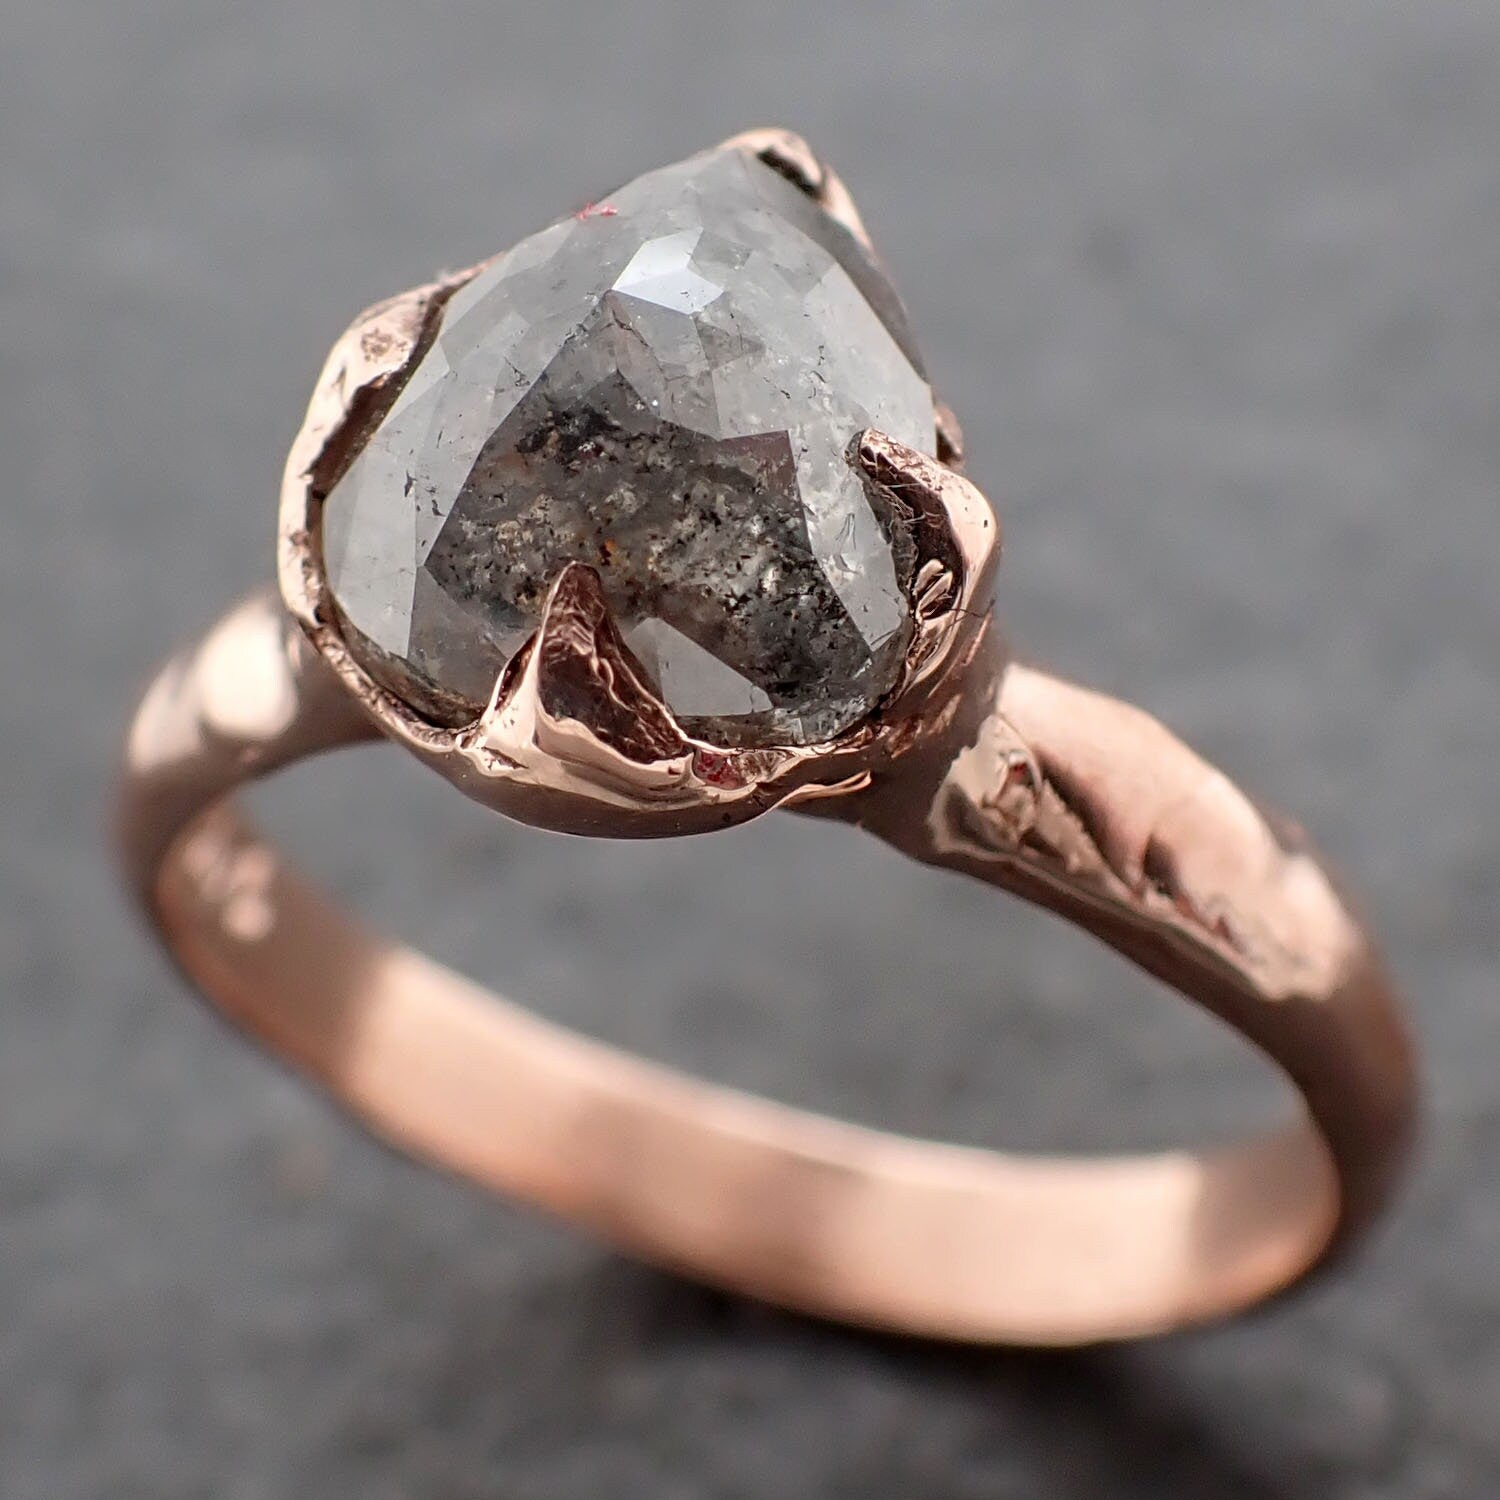 Fancy cut Salt and pepper Solitaire Diamond Engagement 14k Rose Gold Wedding Ring byAngeline 3184